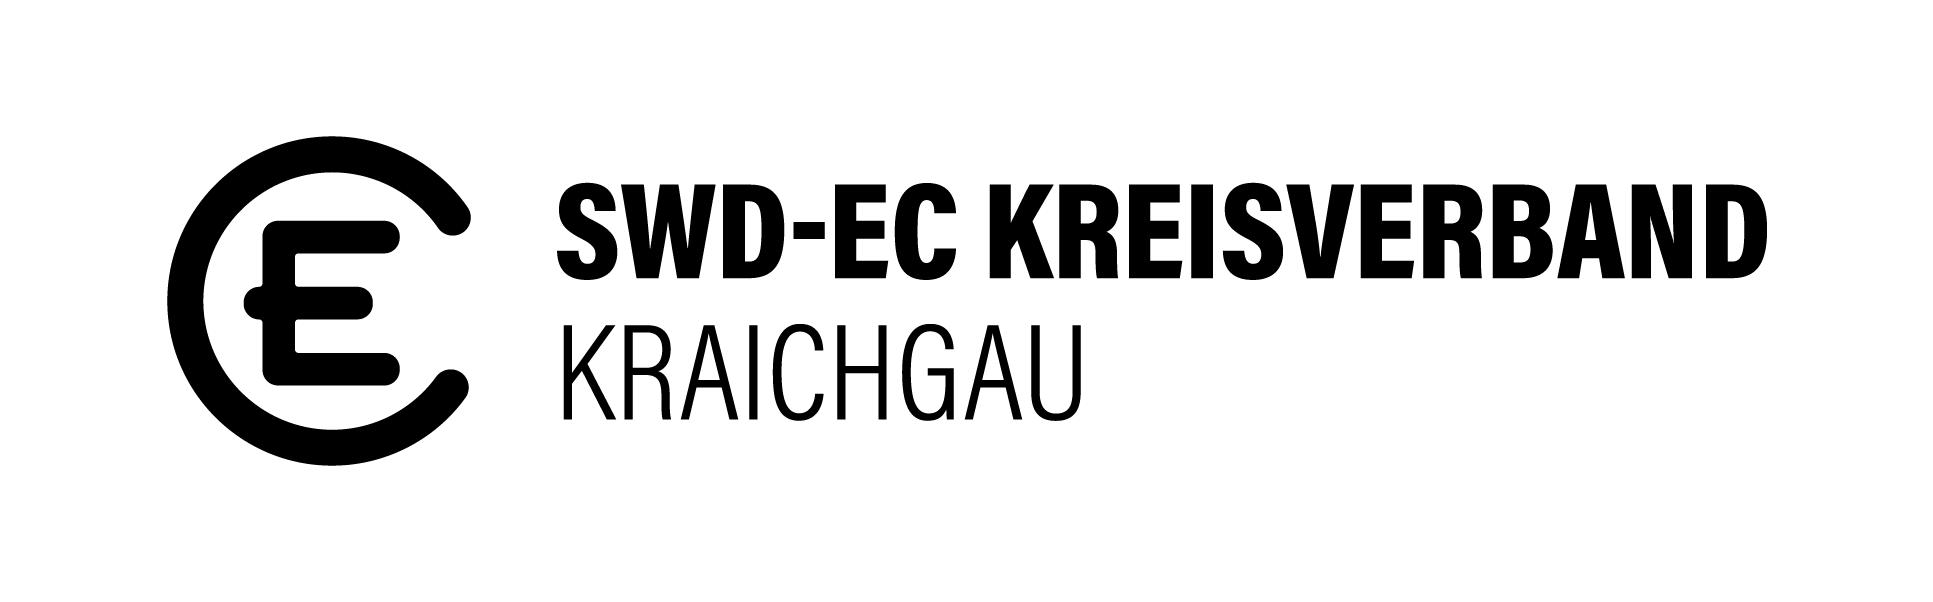 KV Kraichgau